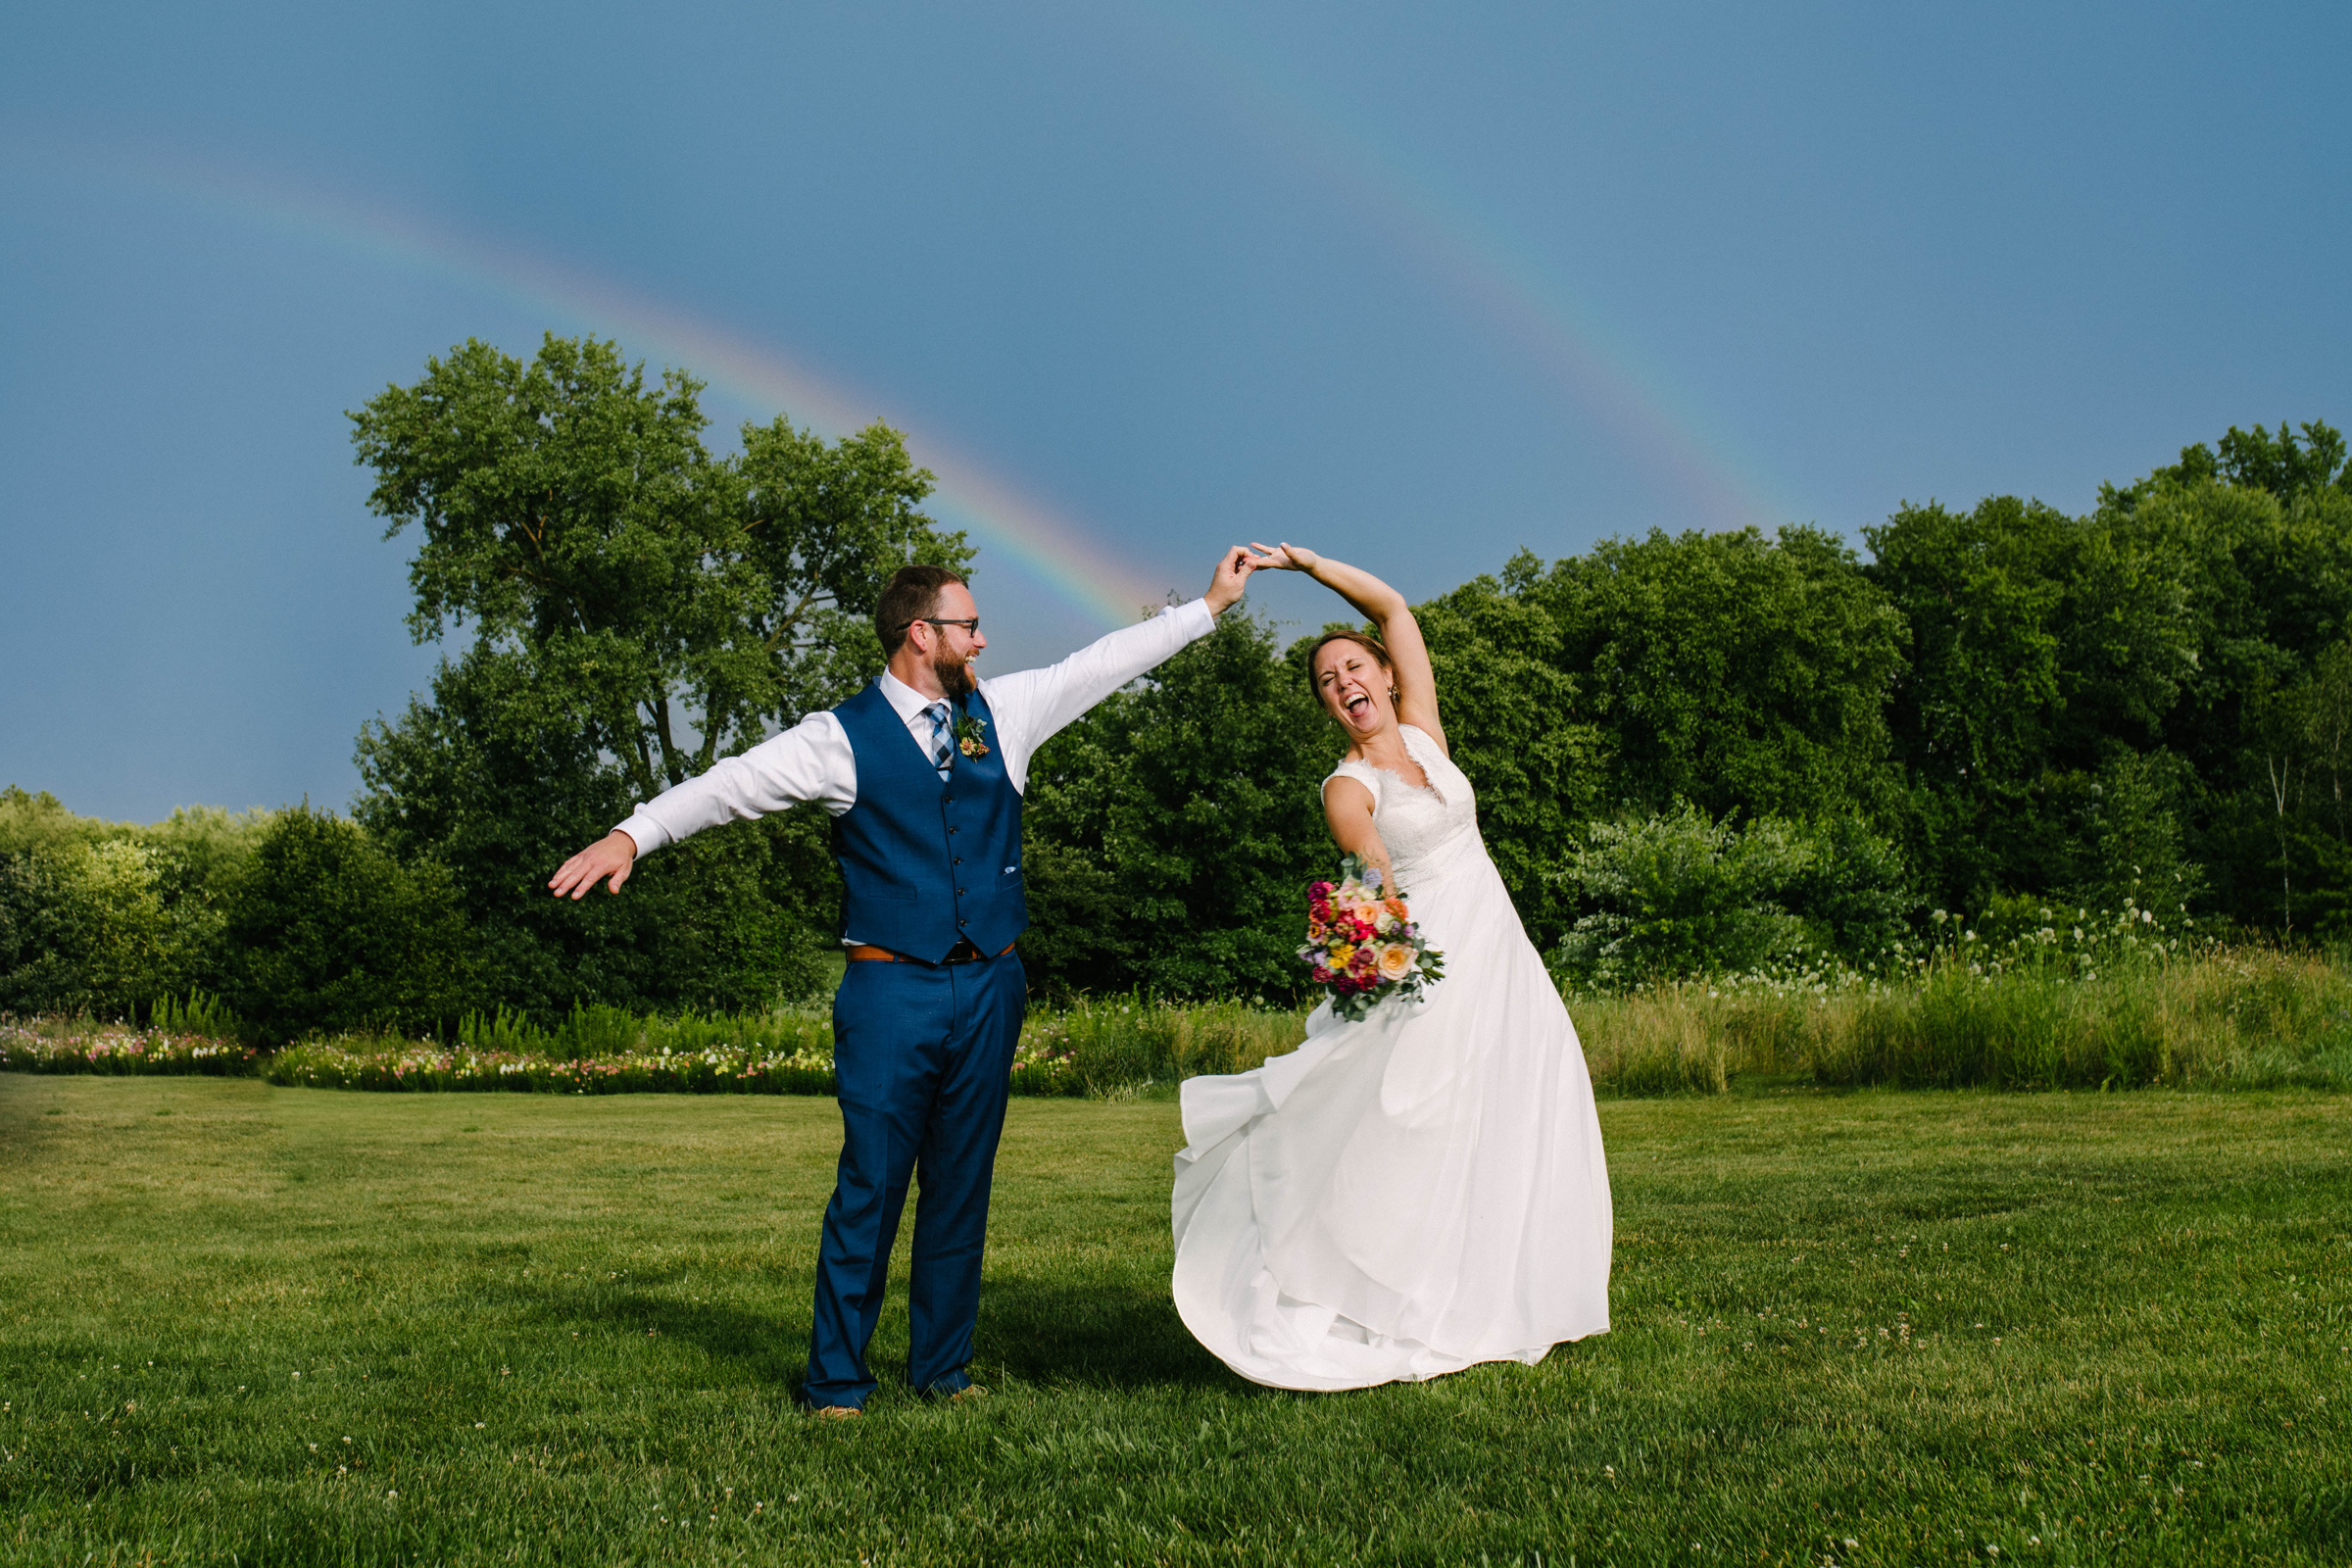 Wedding Day Timeline Intro Photo with double rainbow